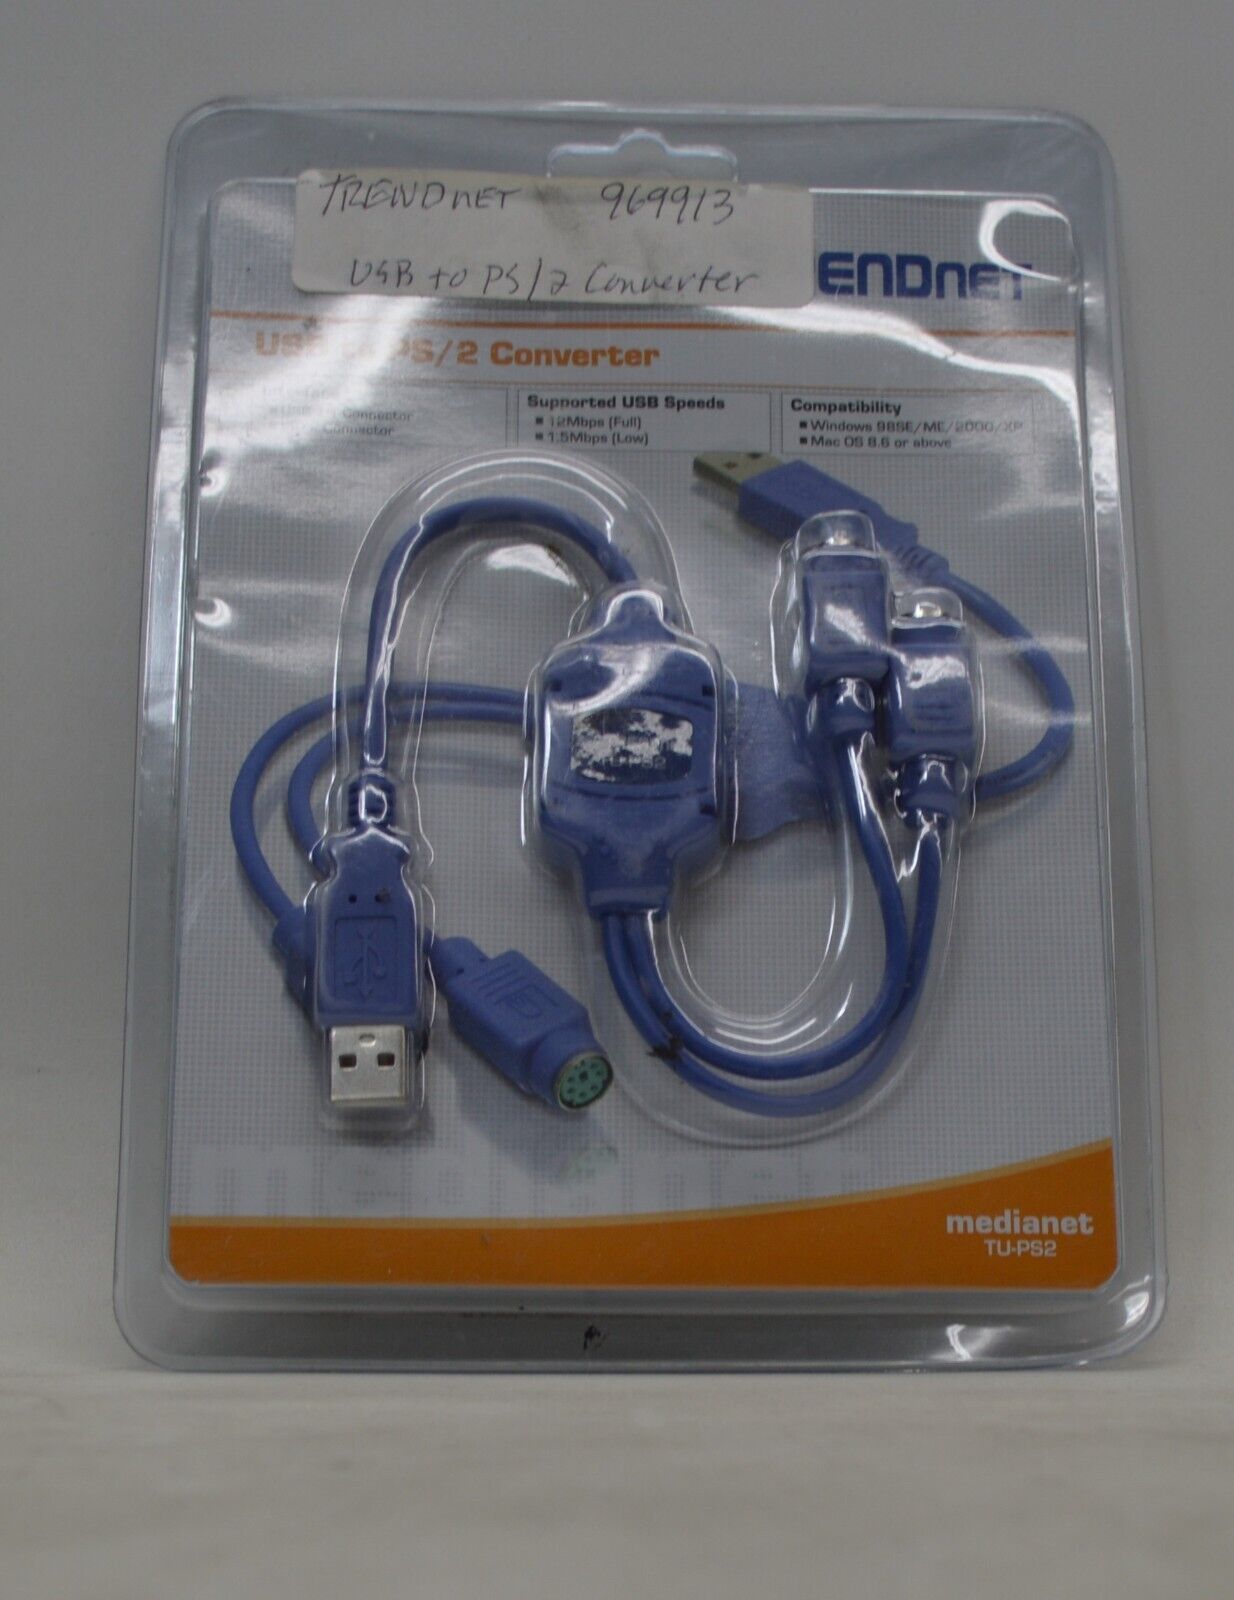 TRENDnet TU-PS2 Medianet USB to PS/2 Converter *New Unused*